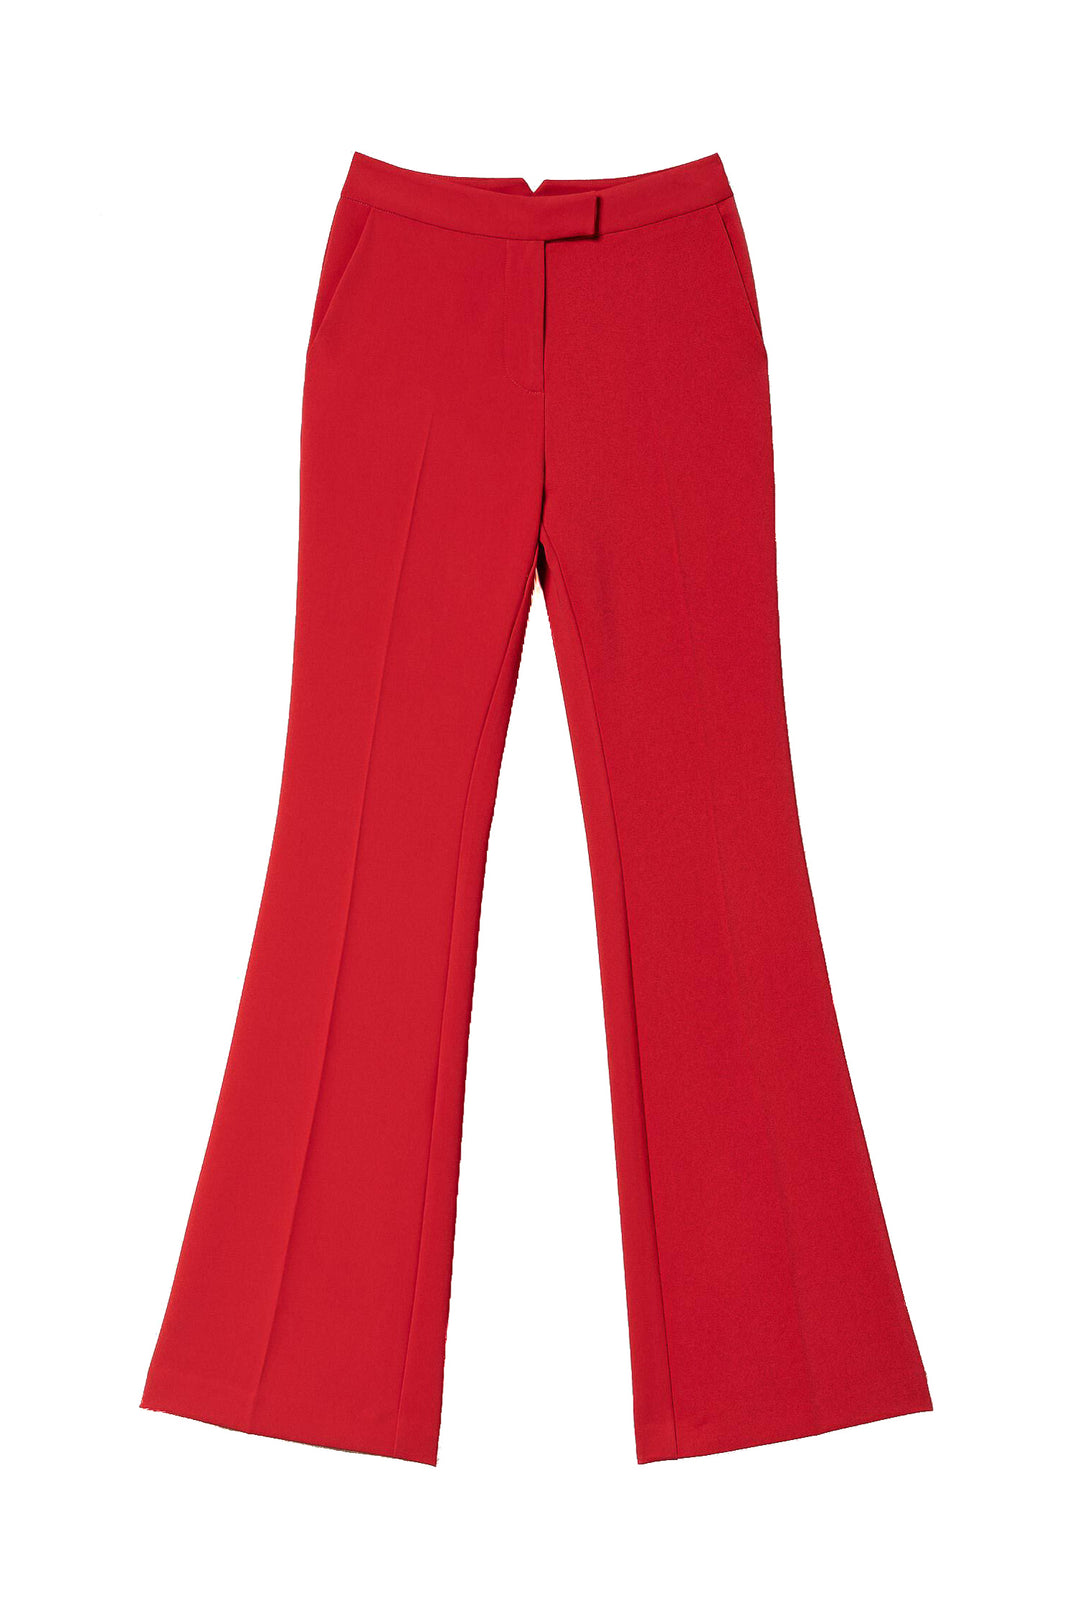 TWINSET Pantaloni flare rossi in cady crêpe - Mancinelli 1954